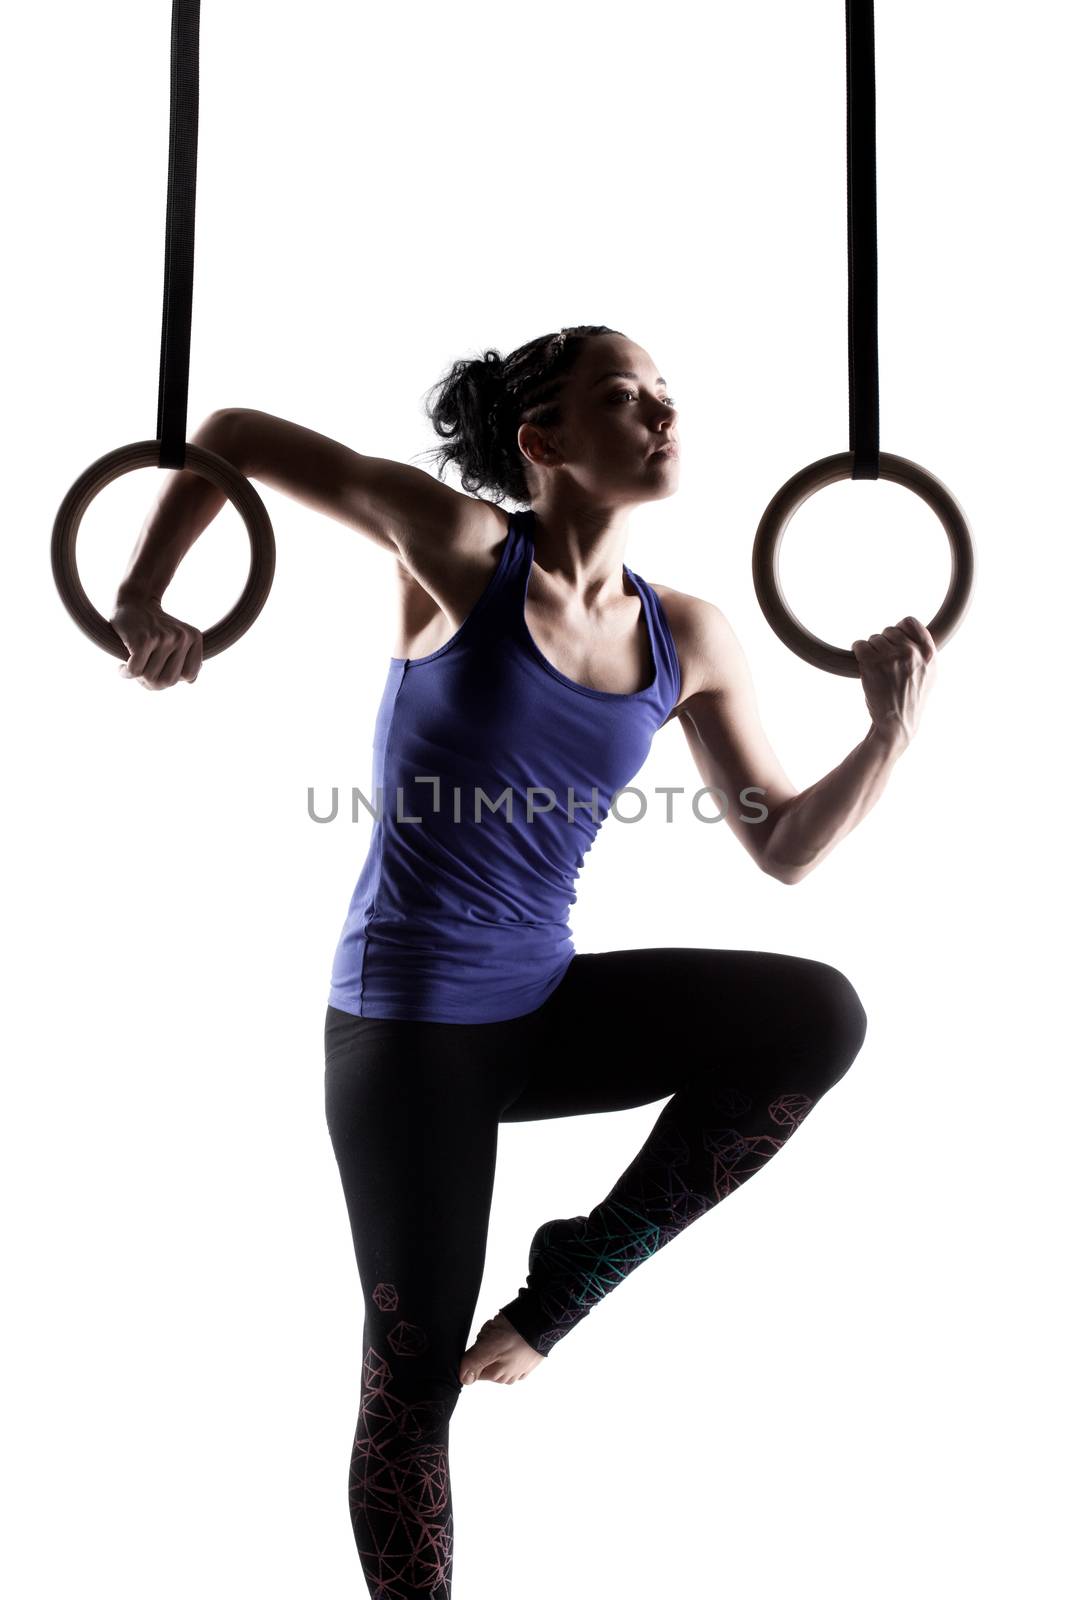 fit girl girl exercising on gymnast rings, against white background